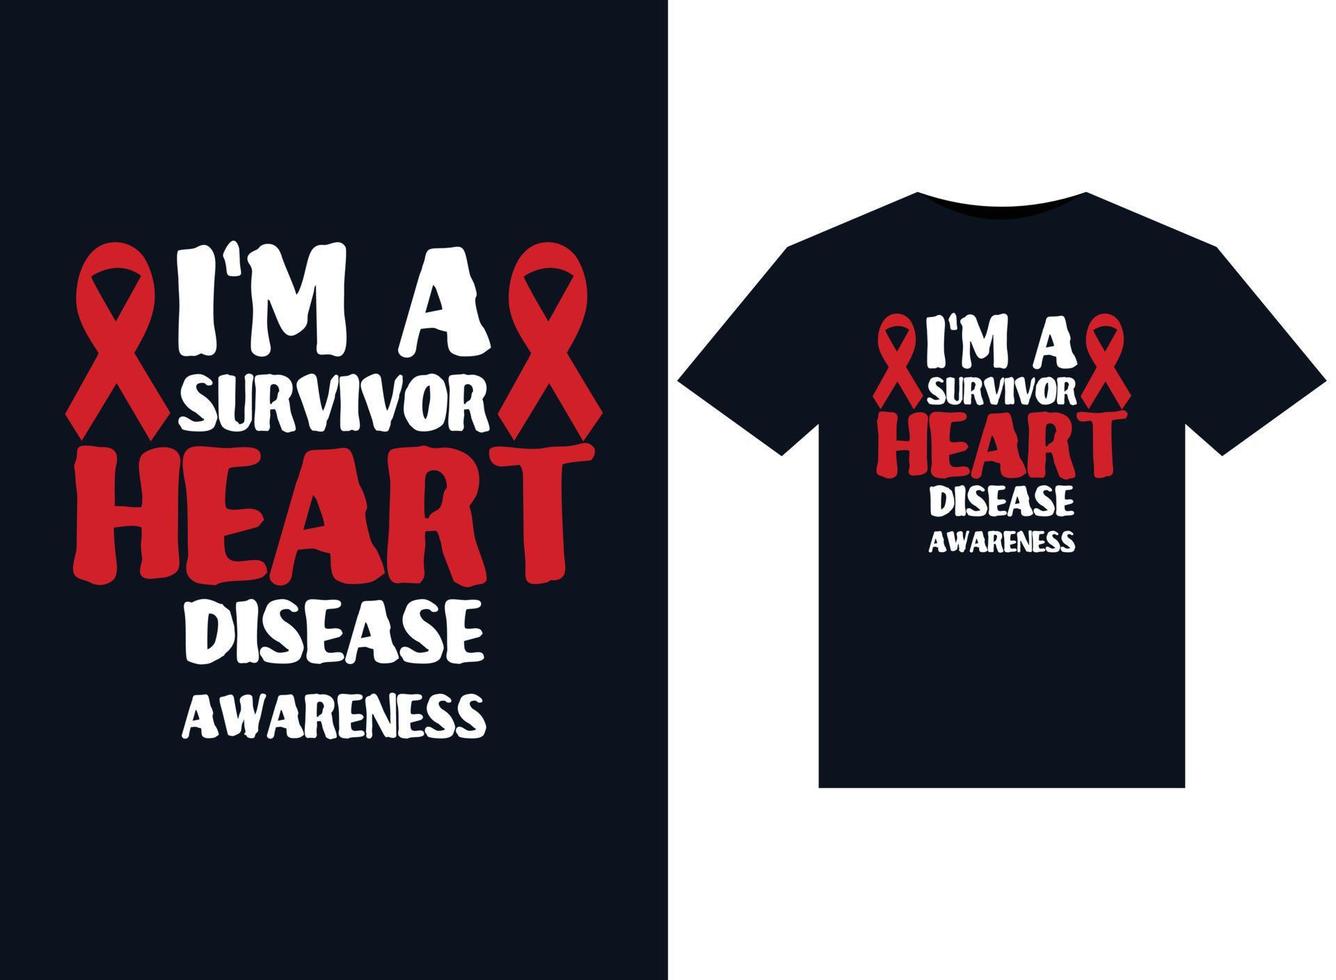 I'm A Survivor Heart Disease Awareness illustrations for print-ready T-Shirts design vector